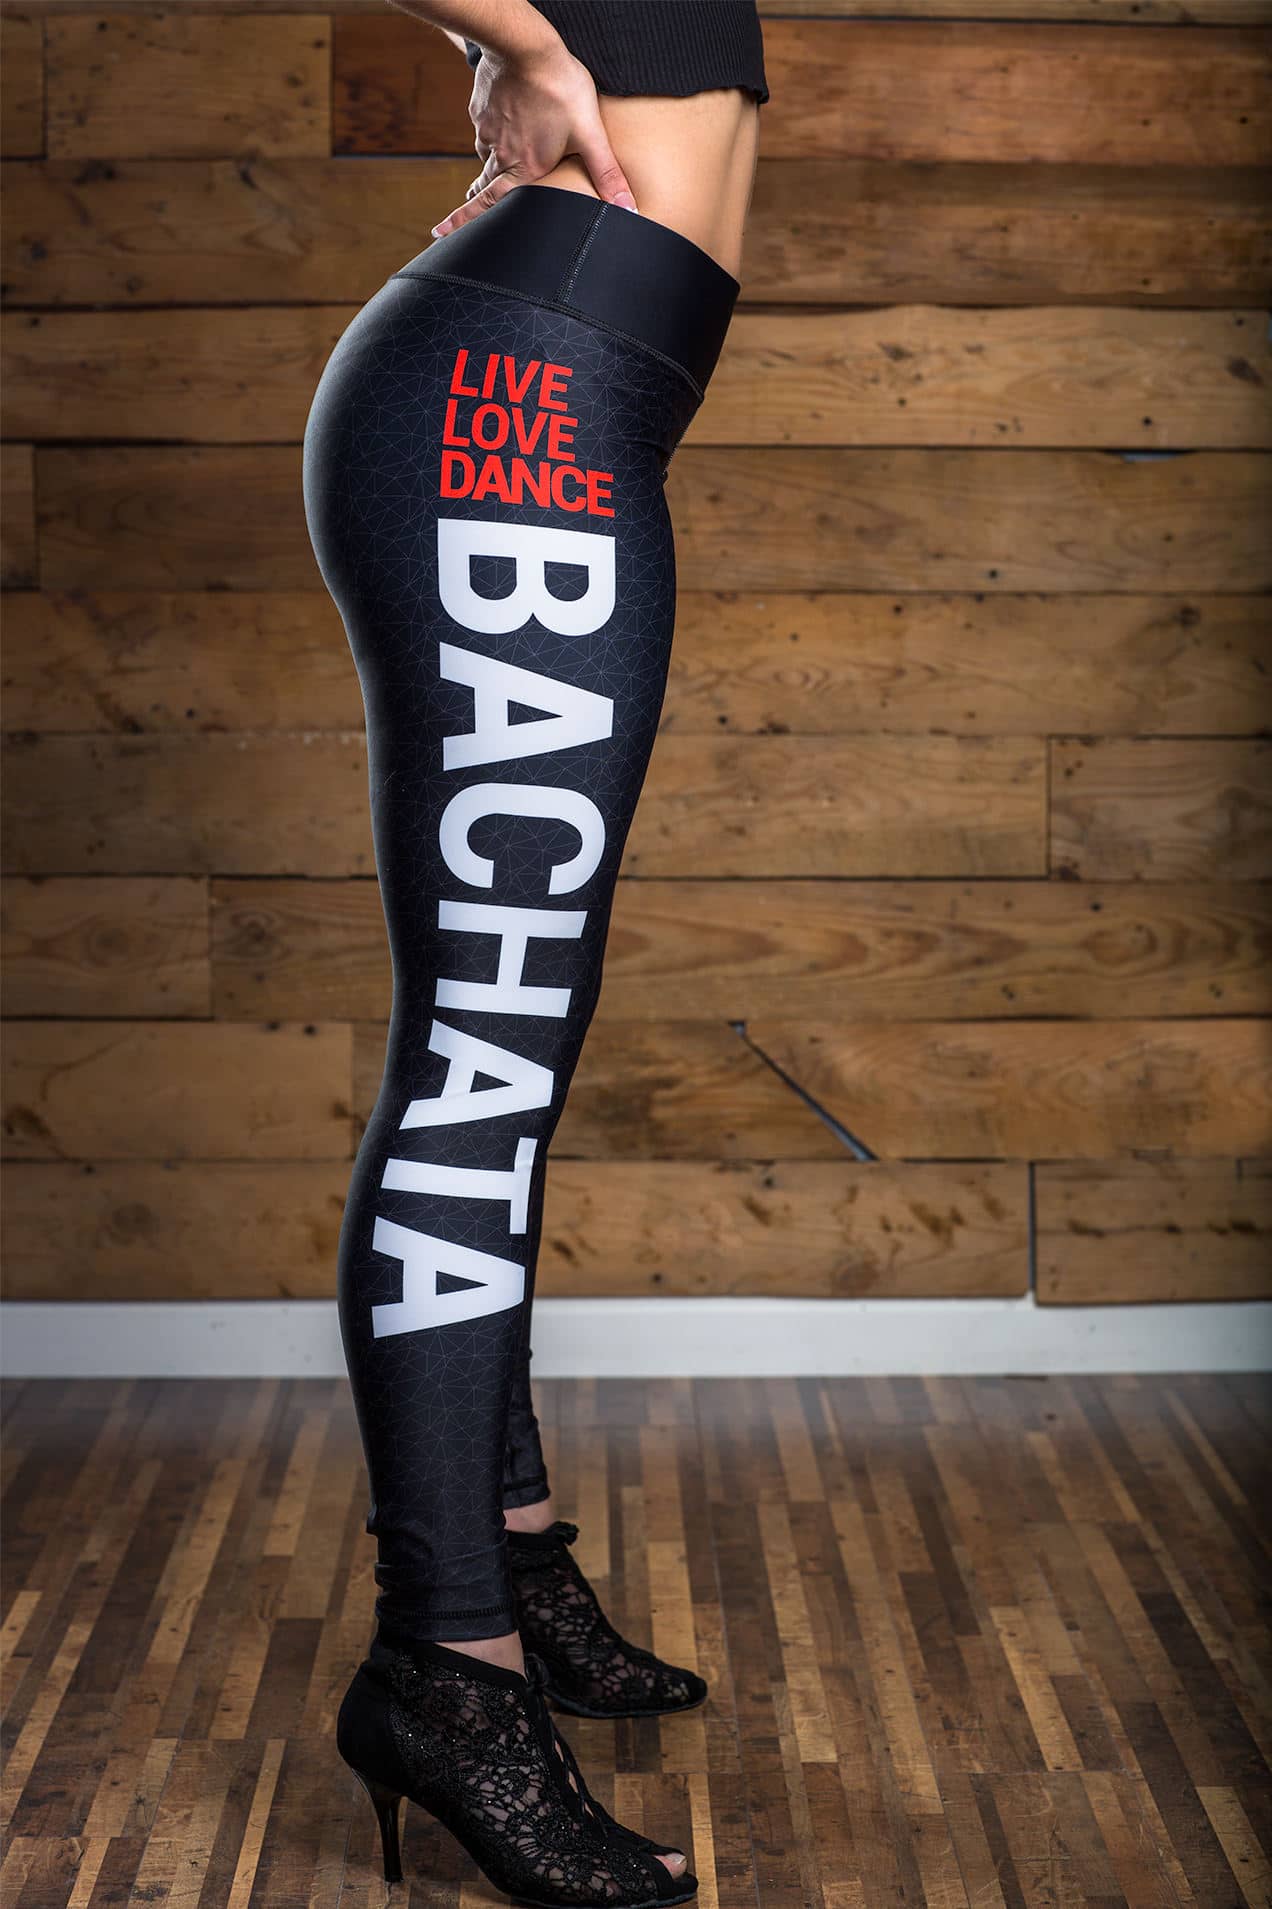 Legging lycra premium with animal print zebra special to dance bachata